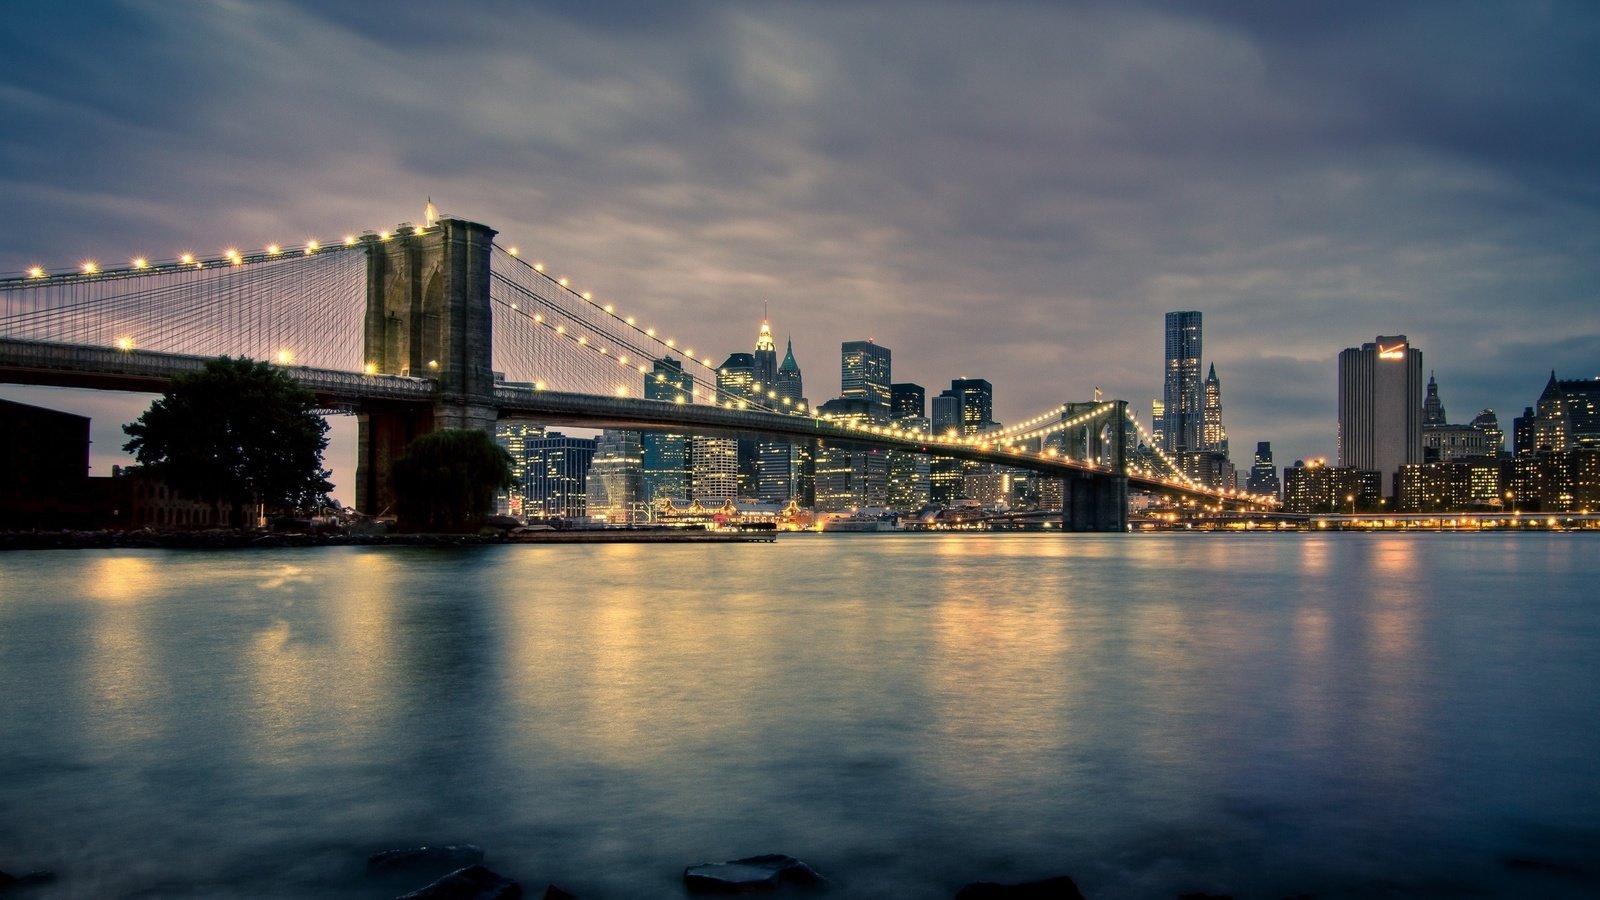 Обои мост, нью-йорк, манхеттен, бруклинский мост, new-york, бруклин бридж, bridge, new york, manhattan, brooklyn bridge разрешение 2560x1440 Загрузить